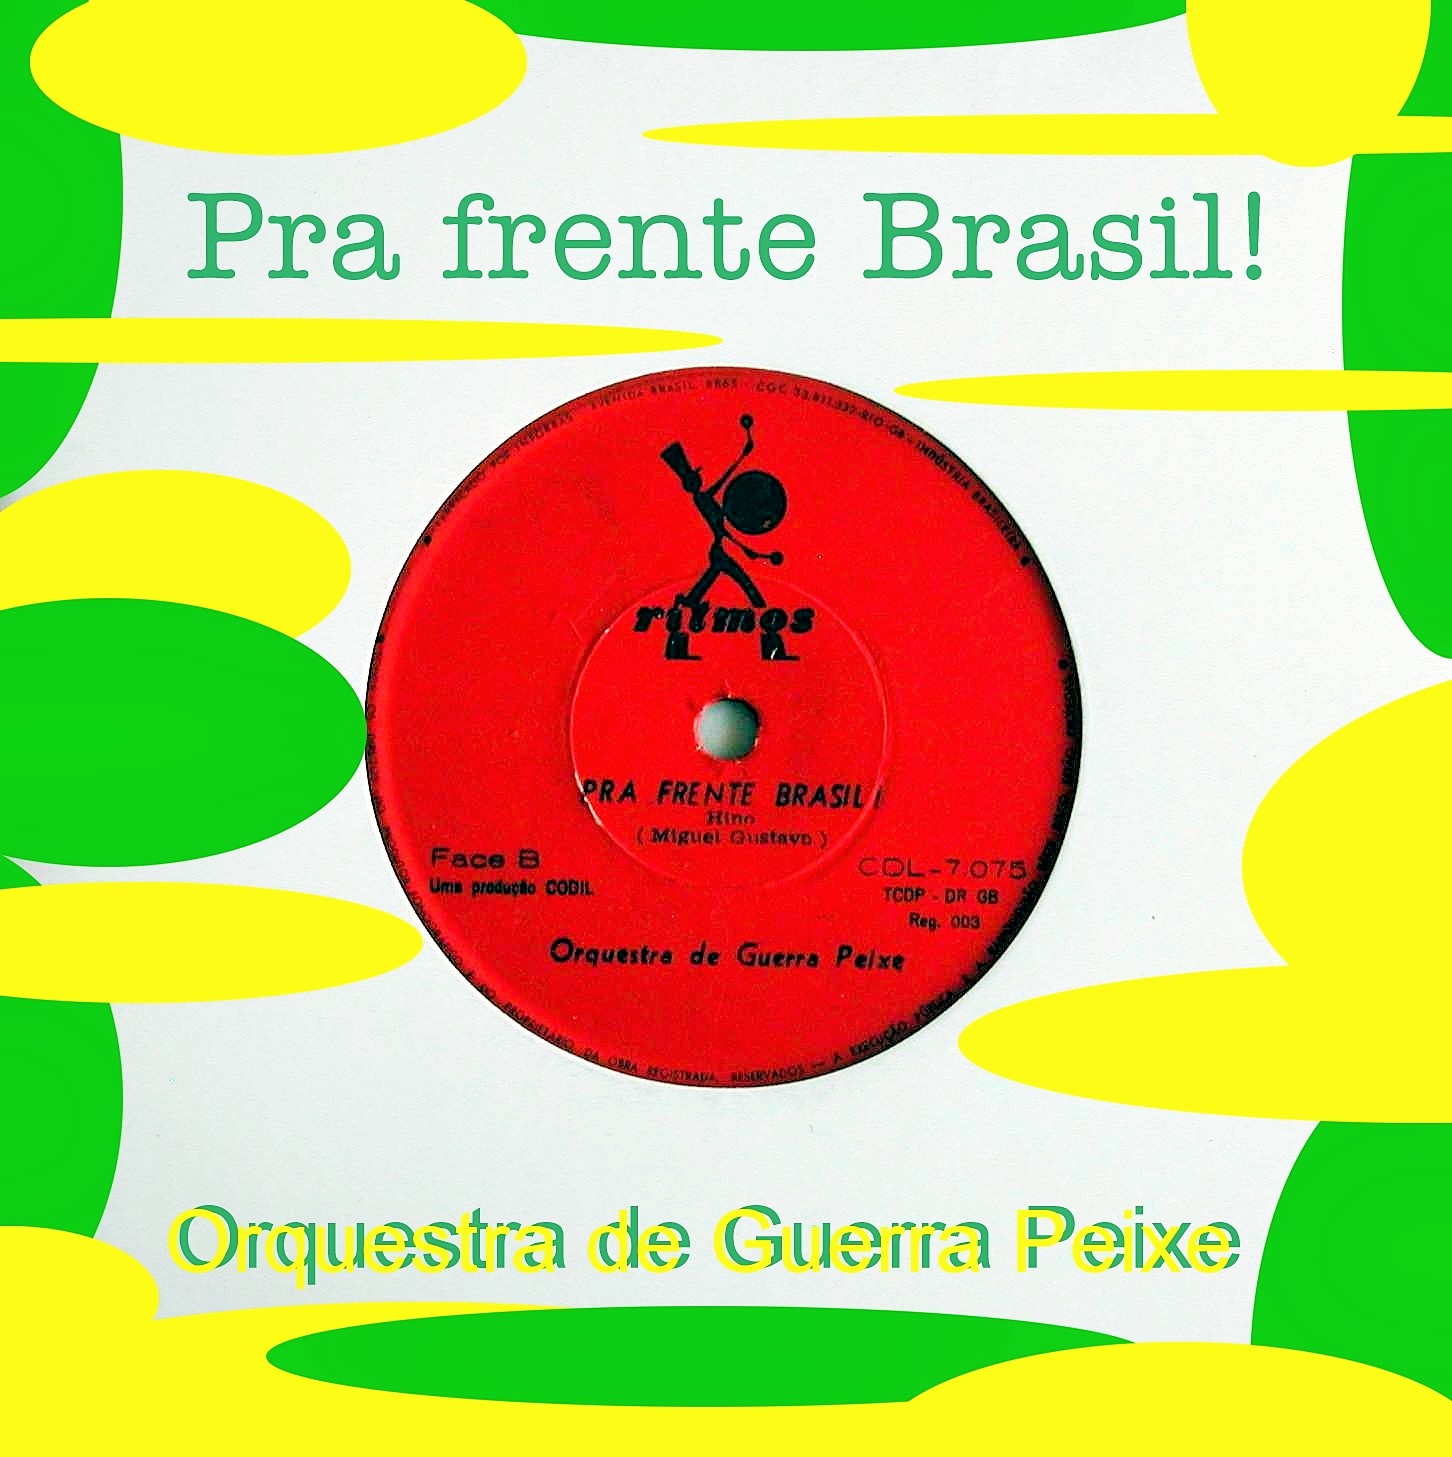 Letra da musica pra frente brasil torrent the importer reported a generic error plural eyes torrent